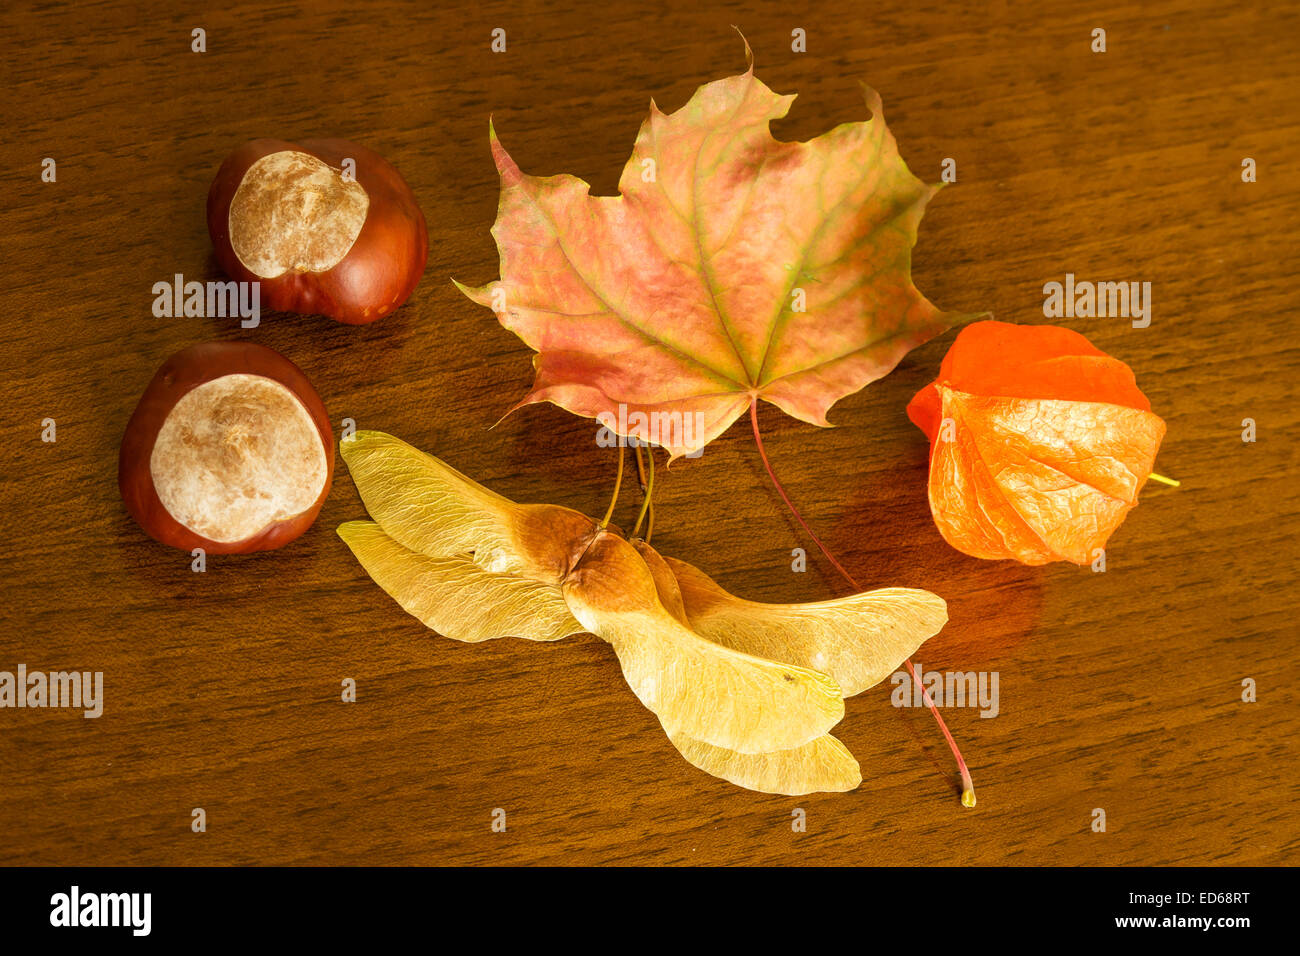 leaf, chestnut, physalis on wood table Stock Photo